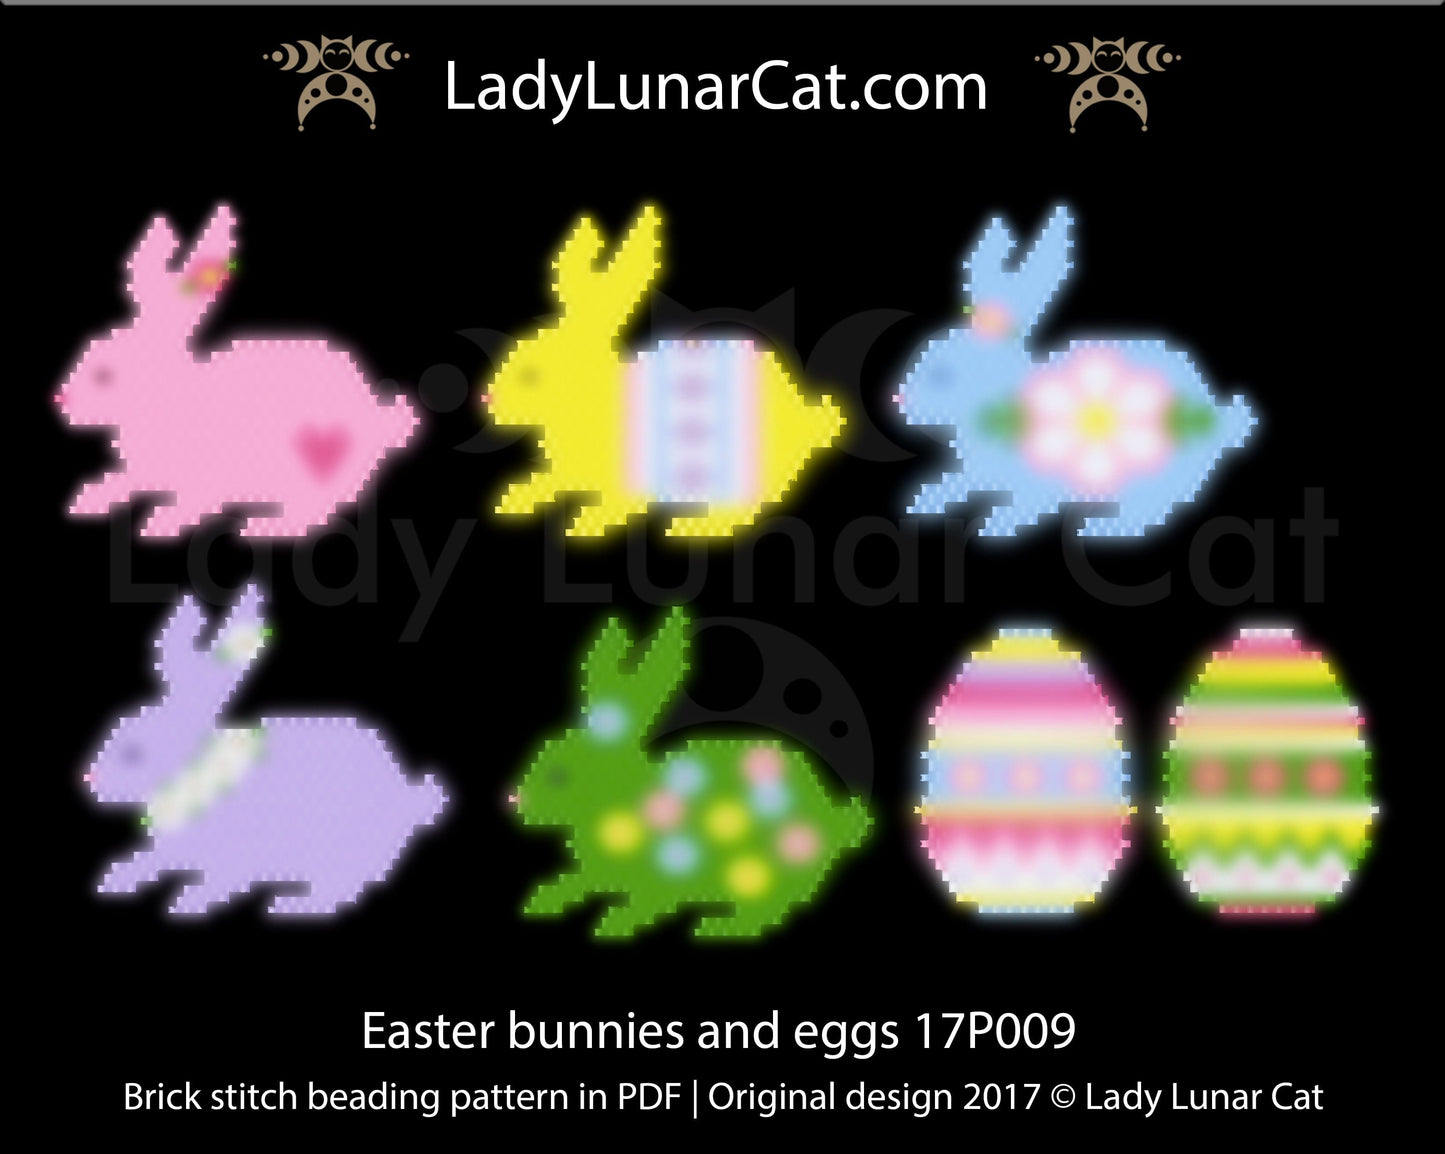 Brick stitch beading pattern Easter Bunnies and Eggs LadyLunarCat